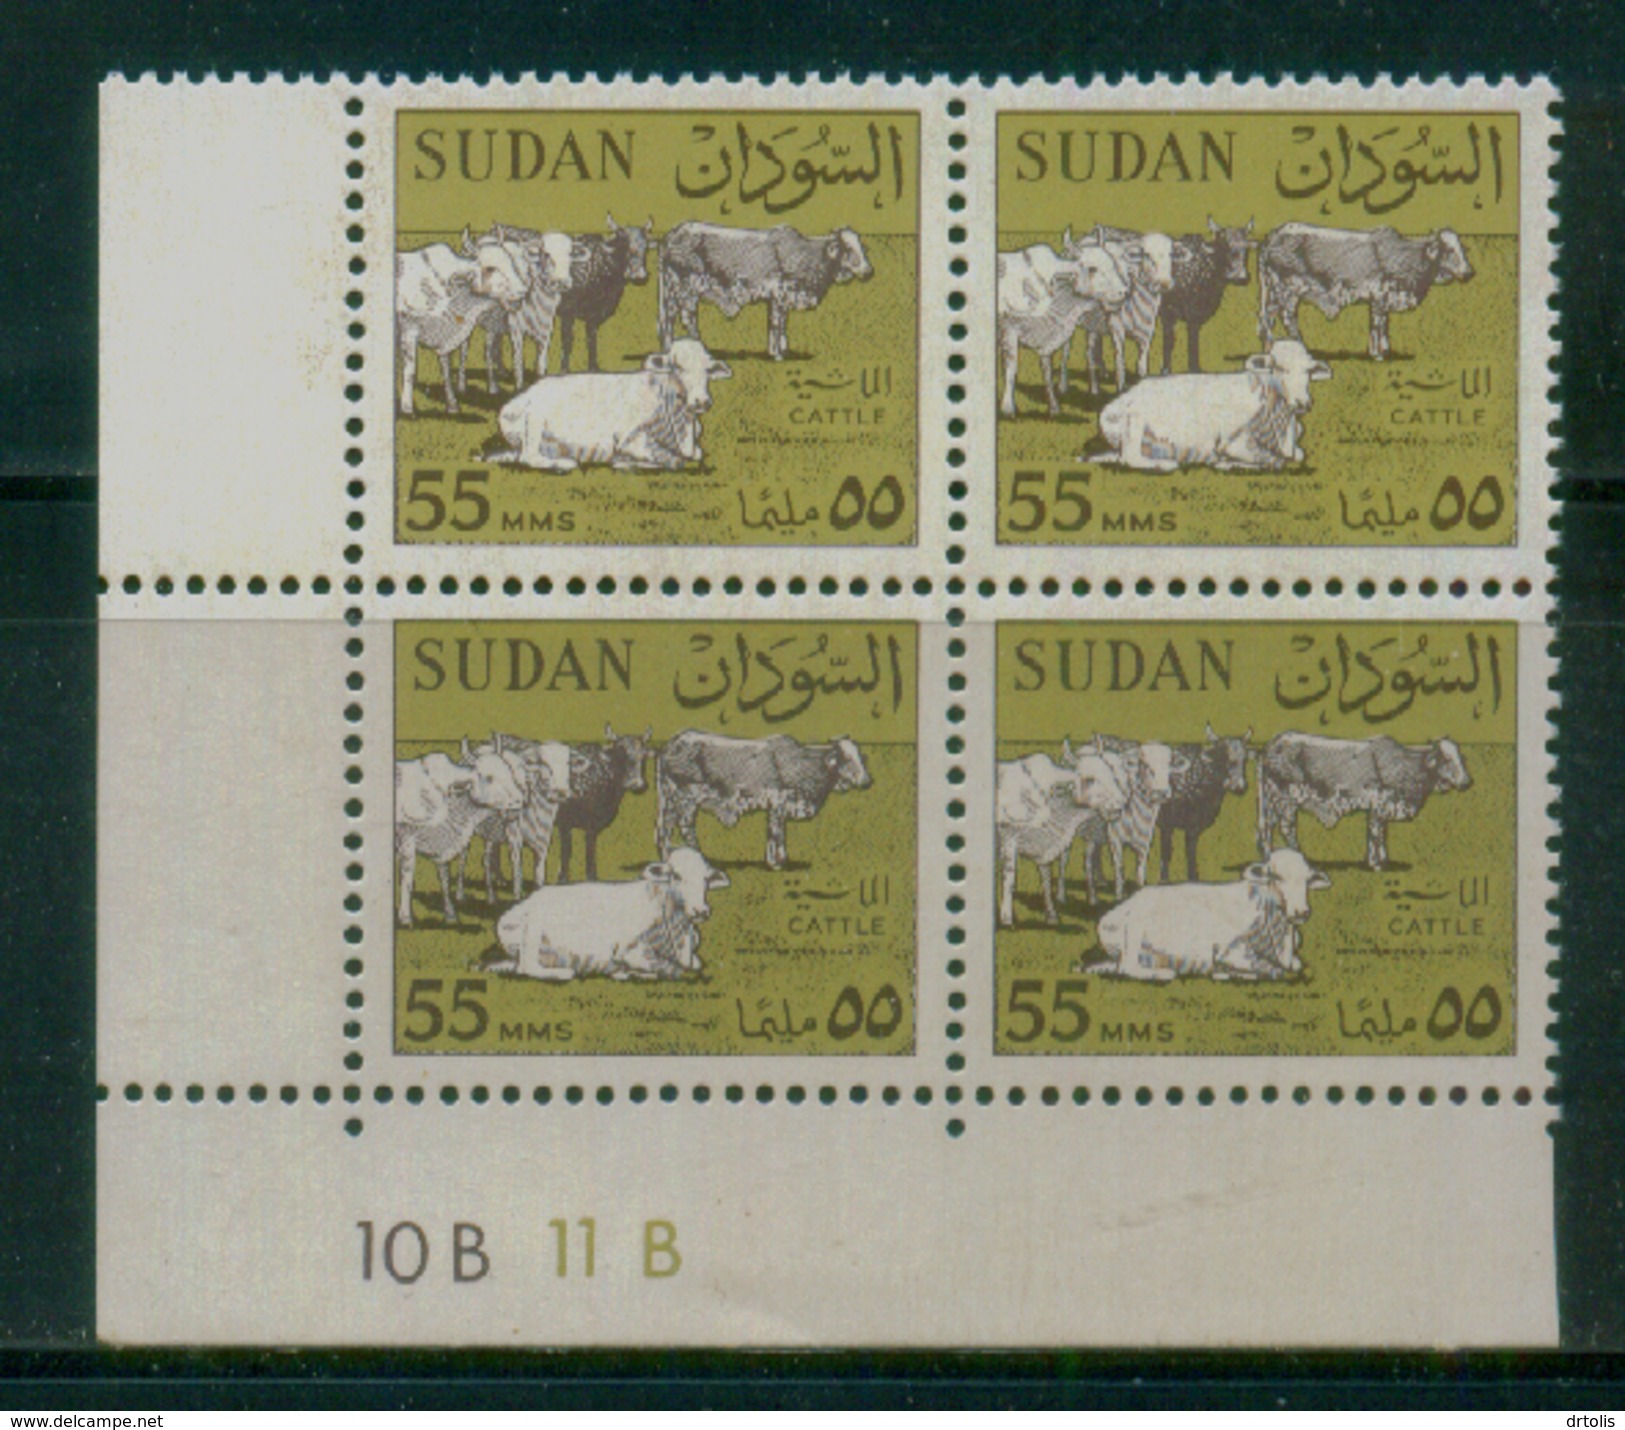 SUDAN / 1975 / CATTLE / MNH / VF - Sudan (1954-...)